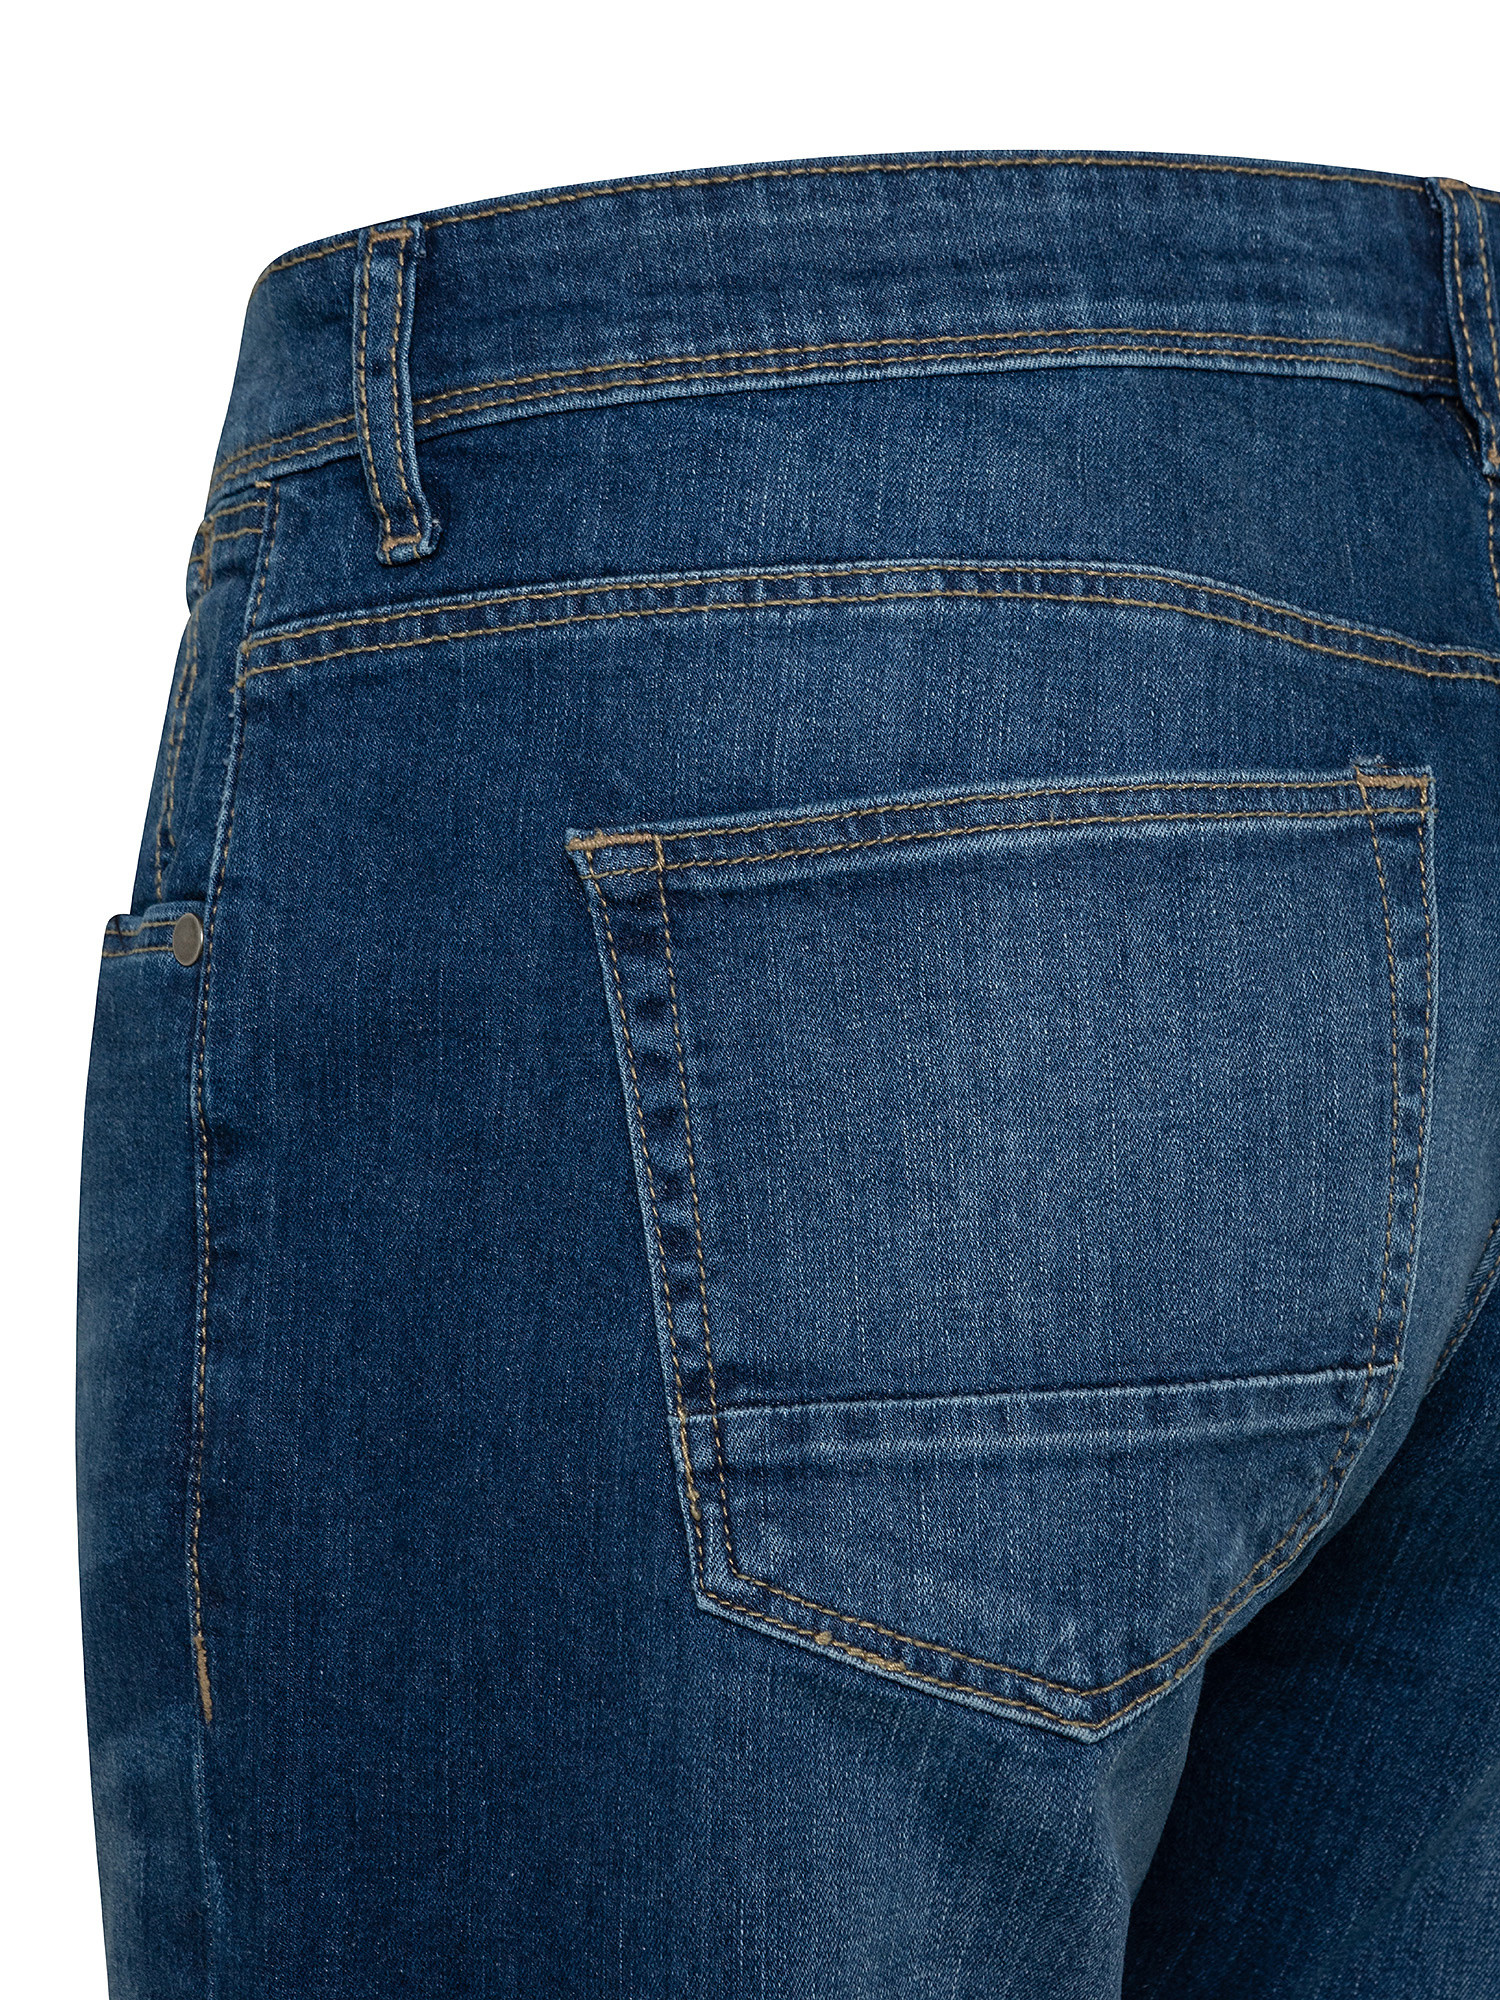 Jeans 5 tasche slim cotone leggero stretch, Blu scuro, large image number 2